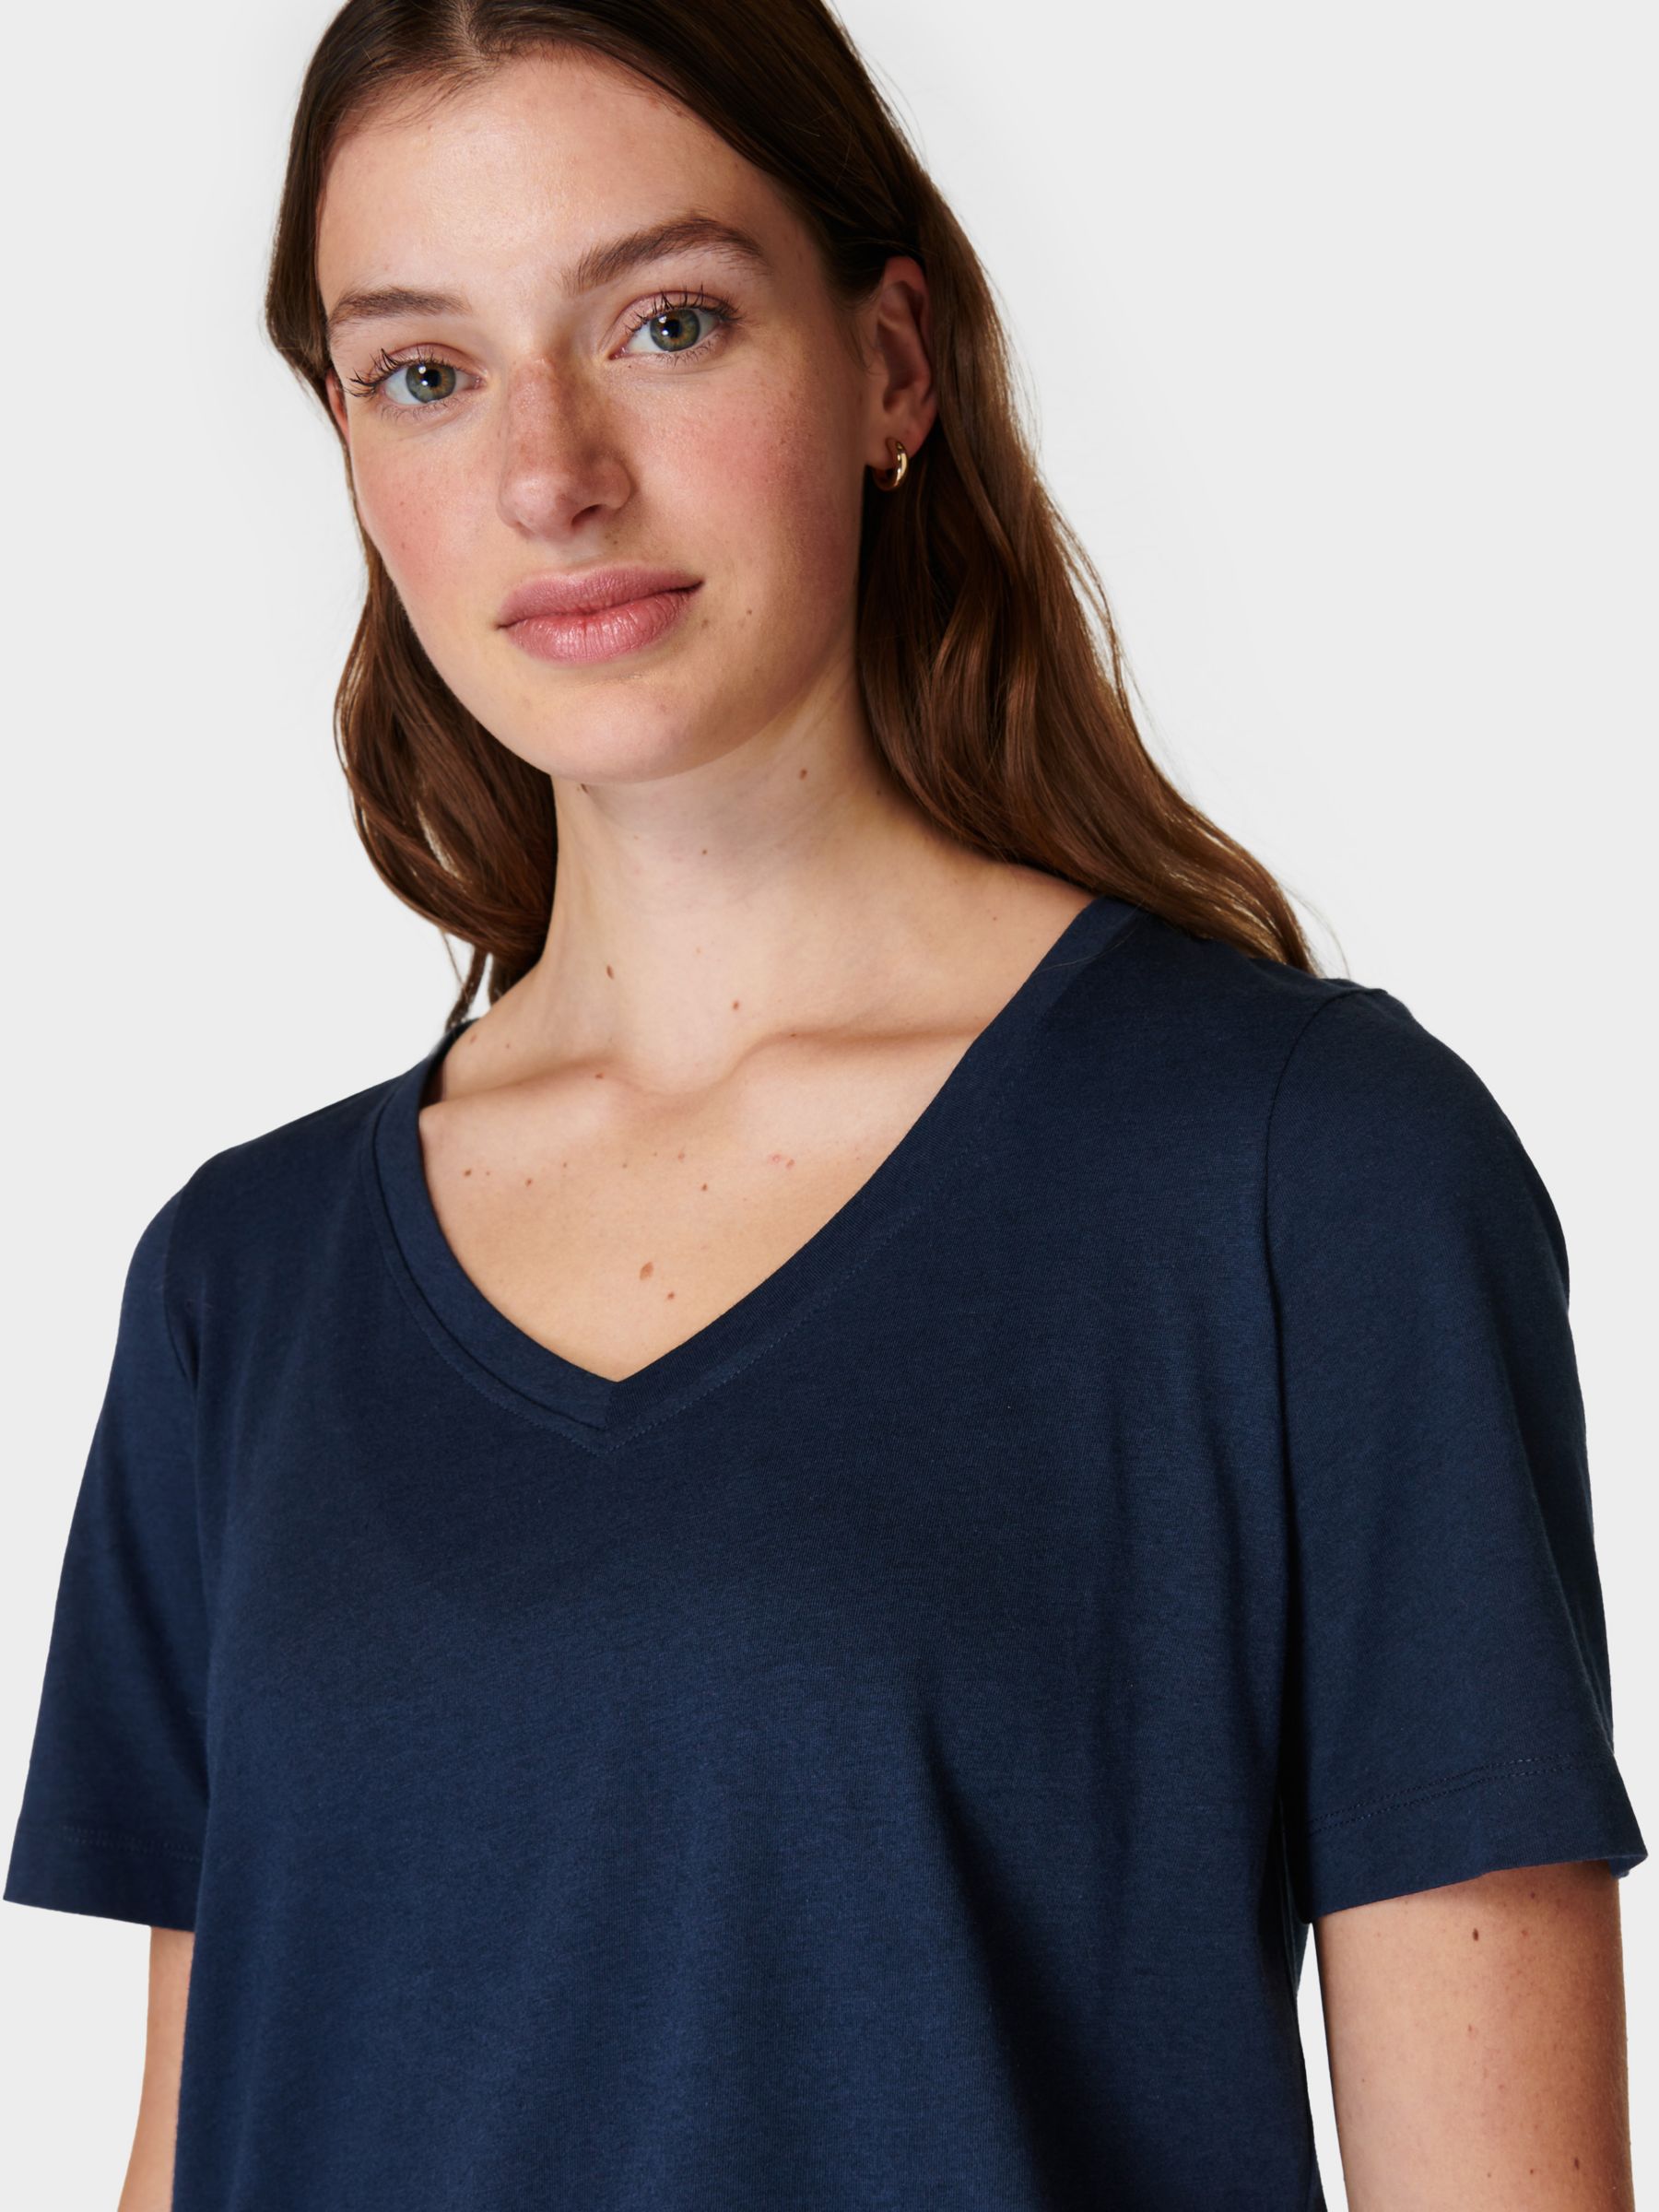 Sweaty Betty Essential Organic Cotton Blend V-Neck T-Shirt, Navy Blue, XXS